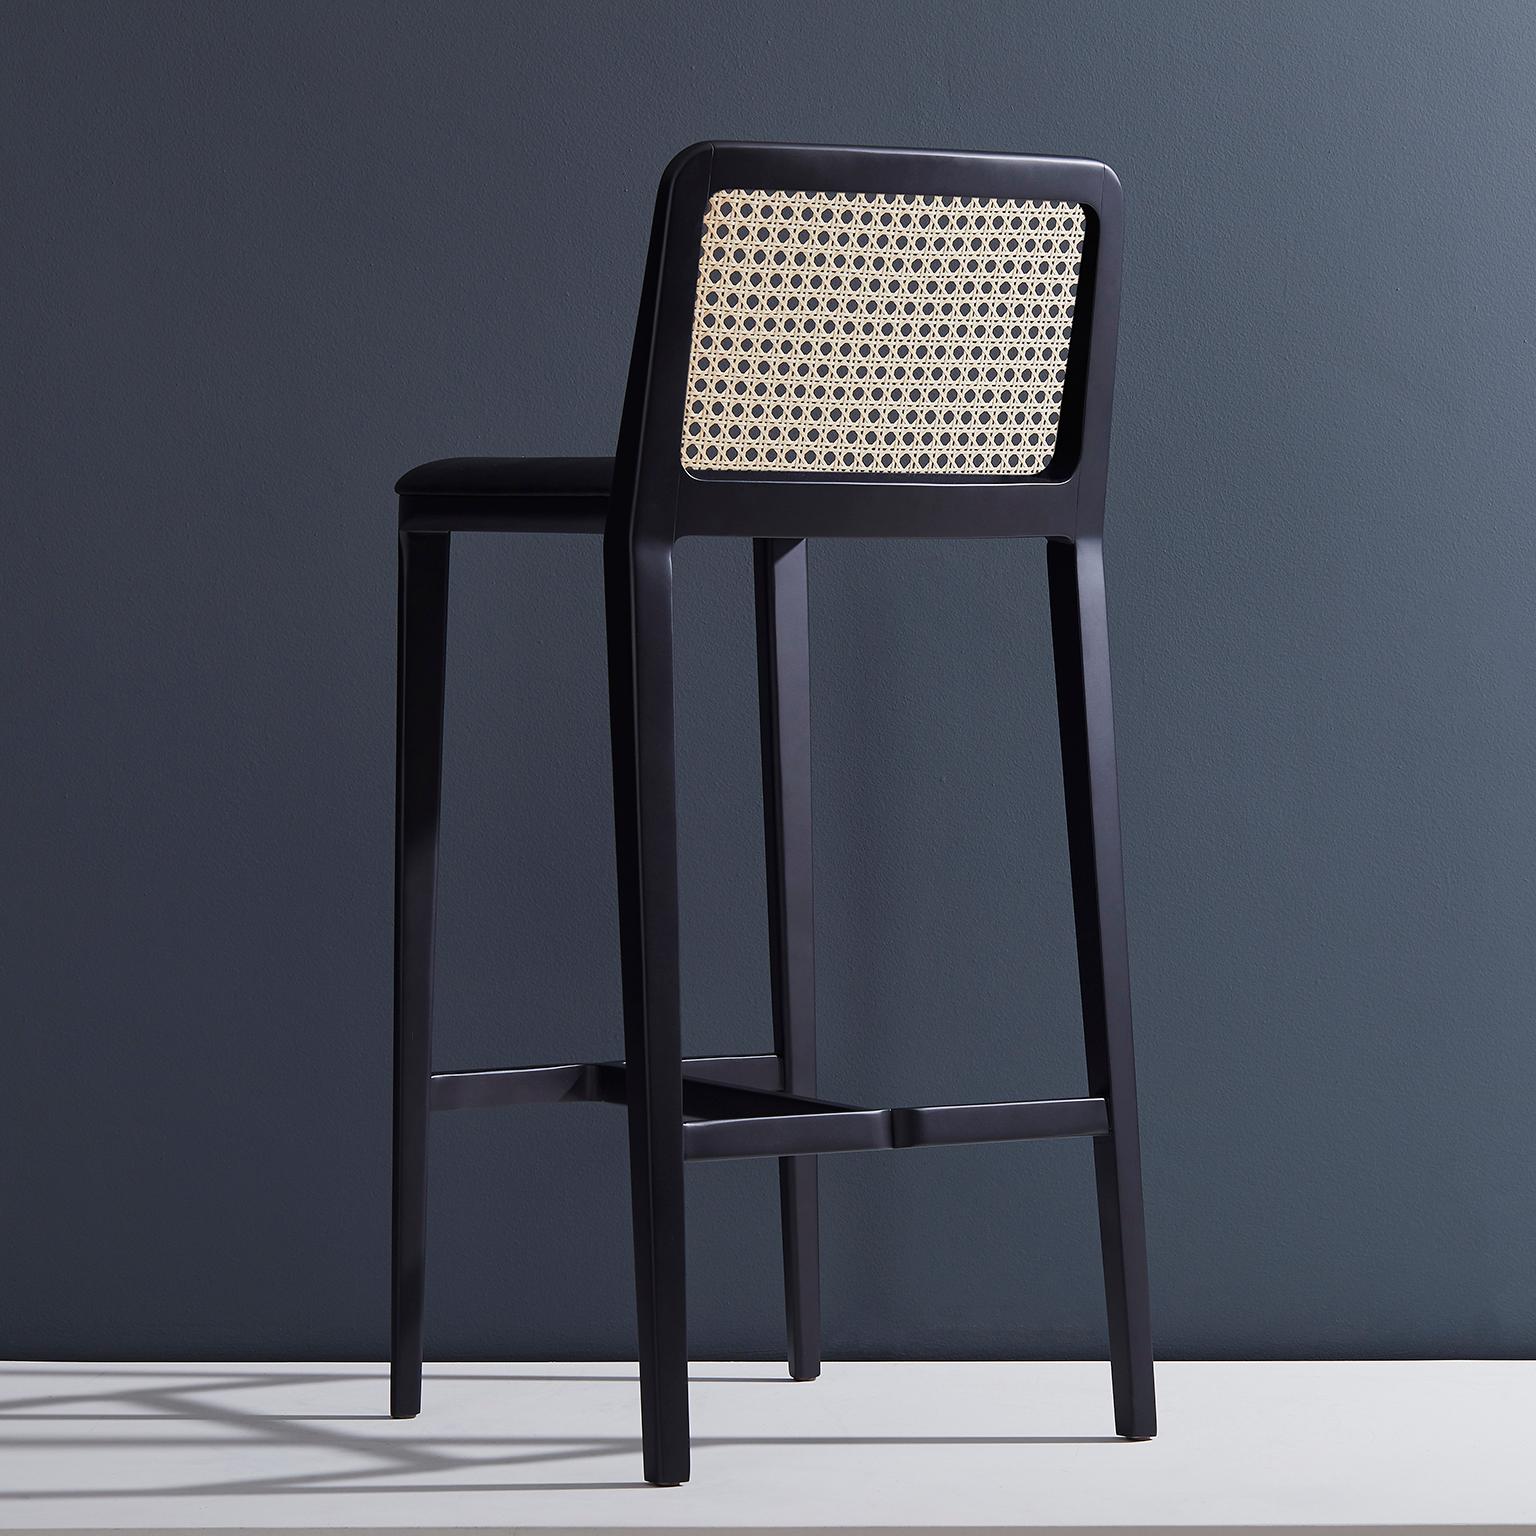 Moderne Style minimal:: tabouret en bois massif:: sièges en textile ou en cuir:: dossier en cannage en vente